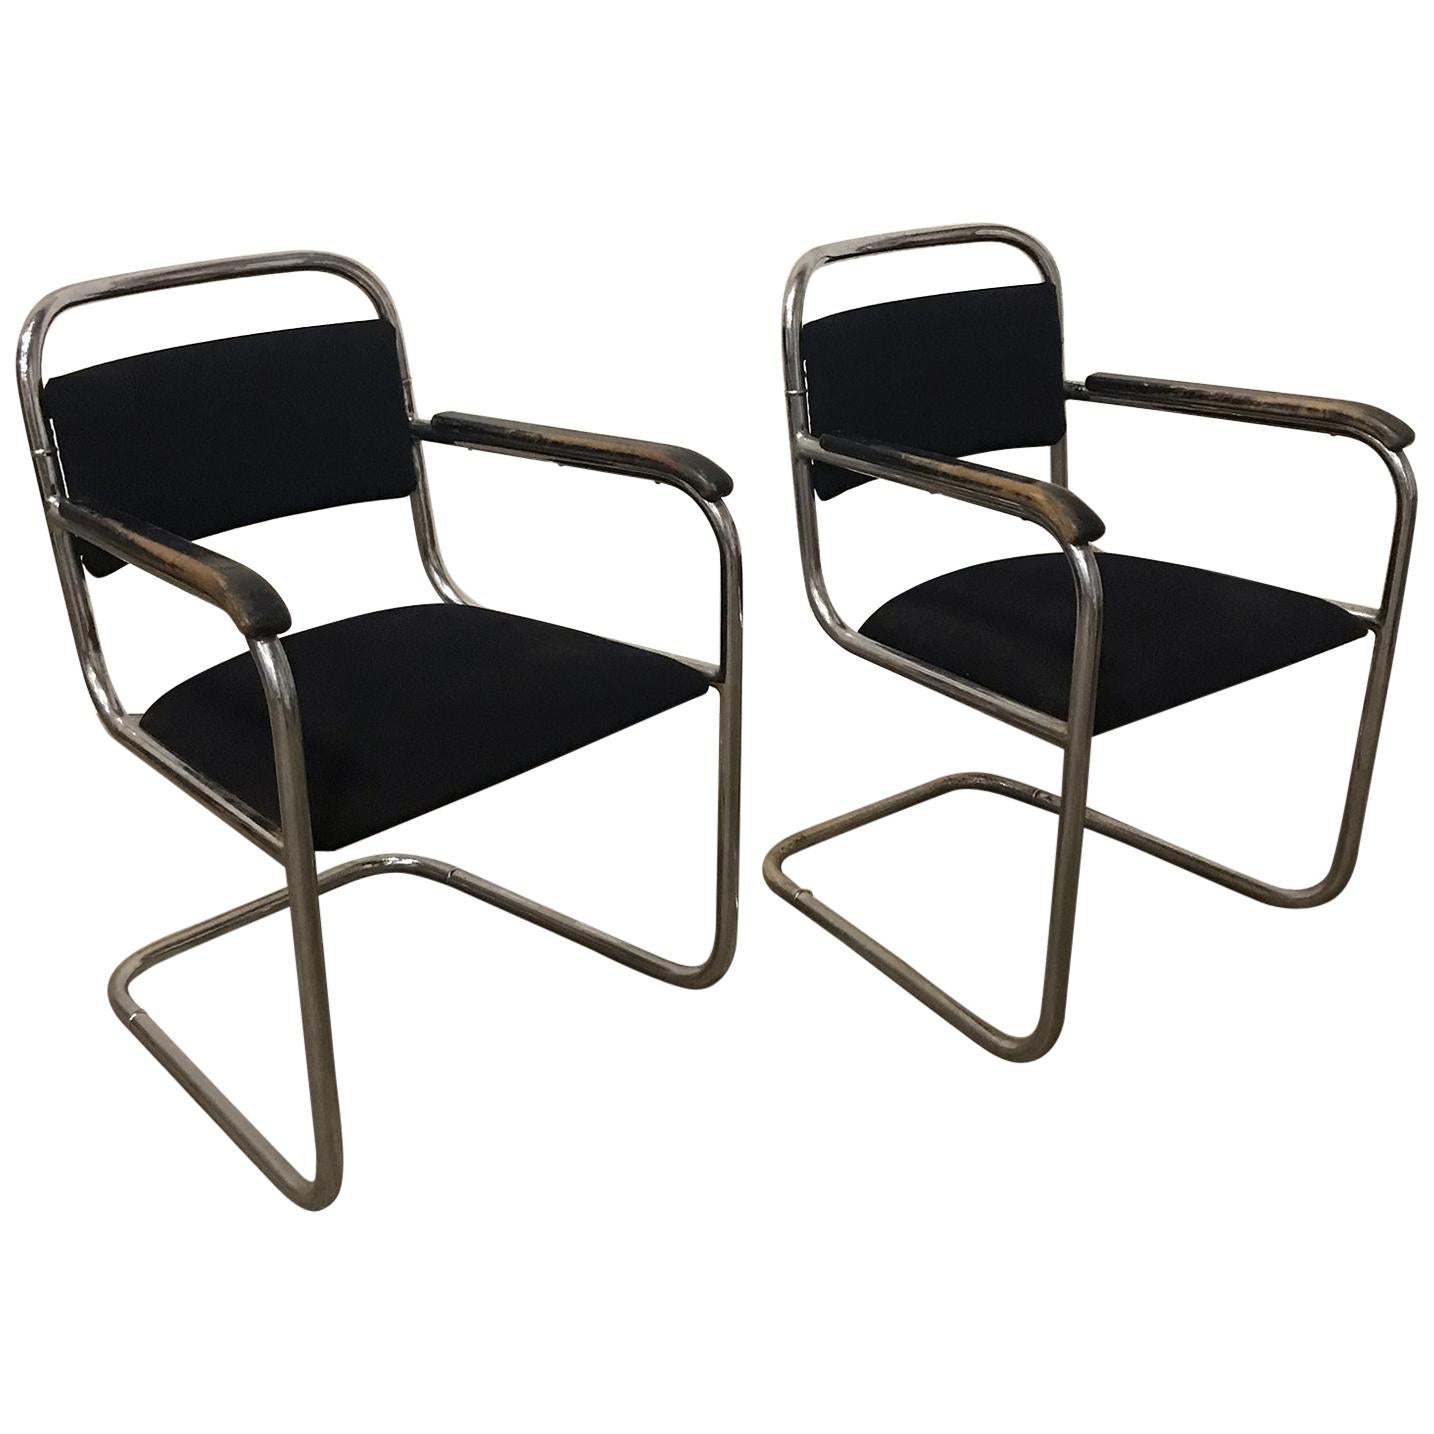 Dutch Design, Set of Original Tubular Chairs with Black Upholstery, circa 1930